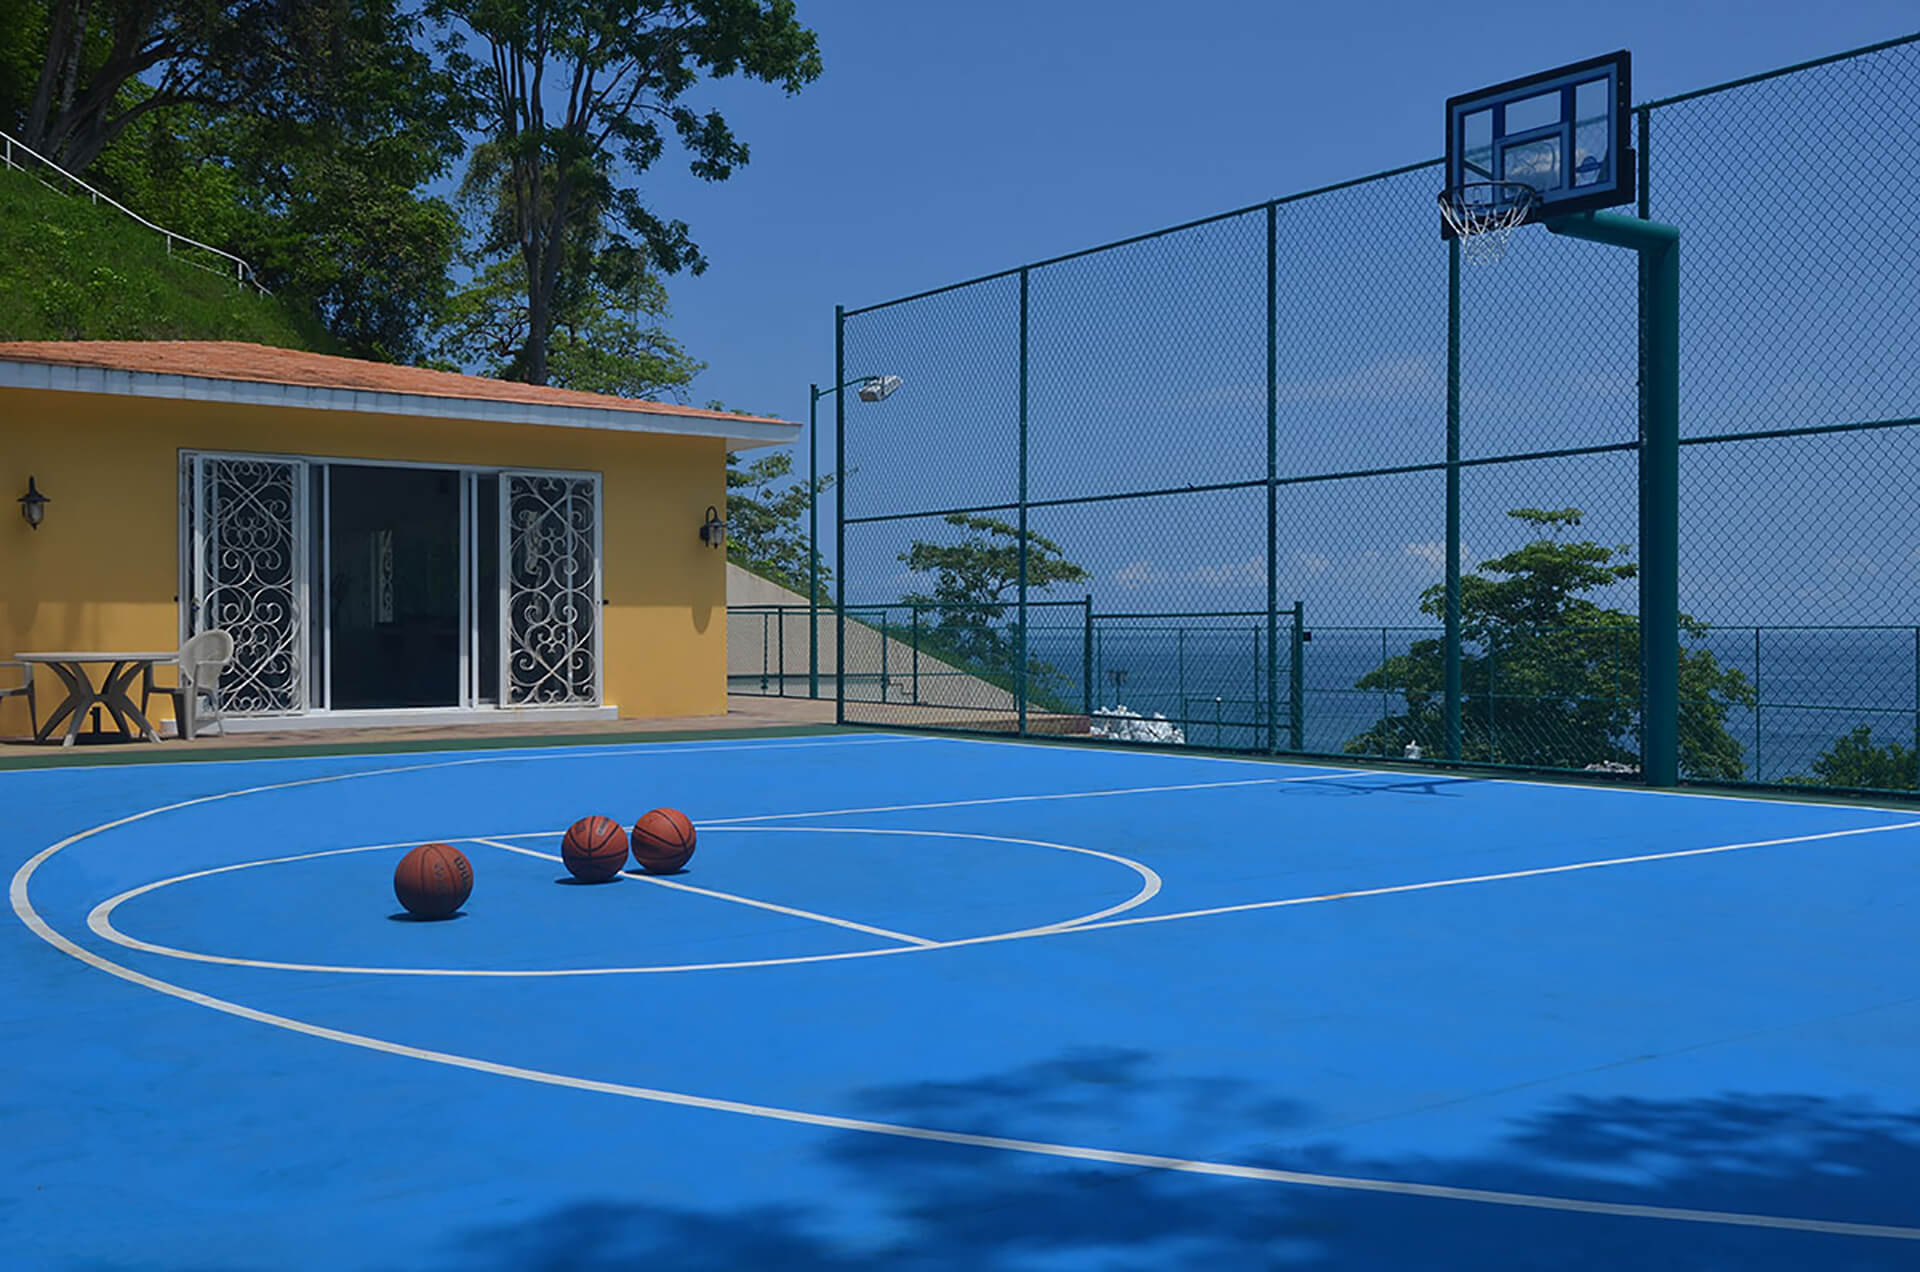 Playasola’s basketball court. 